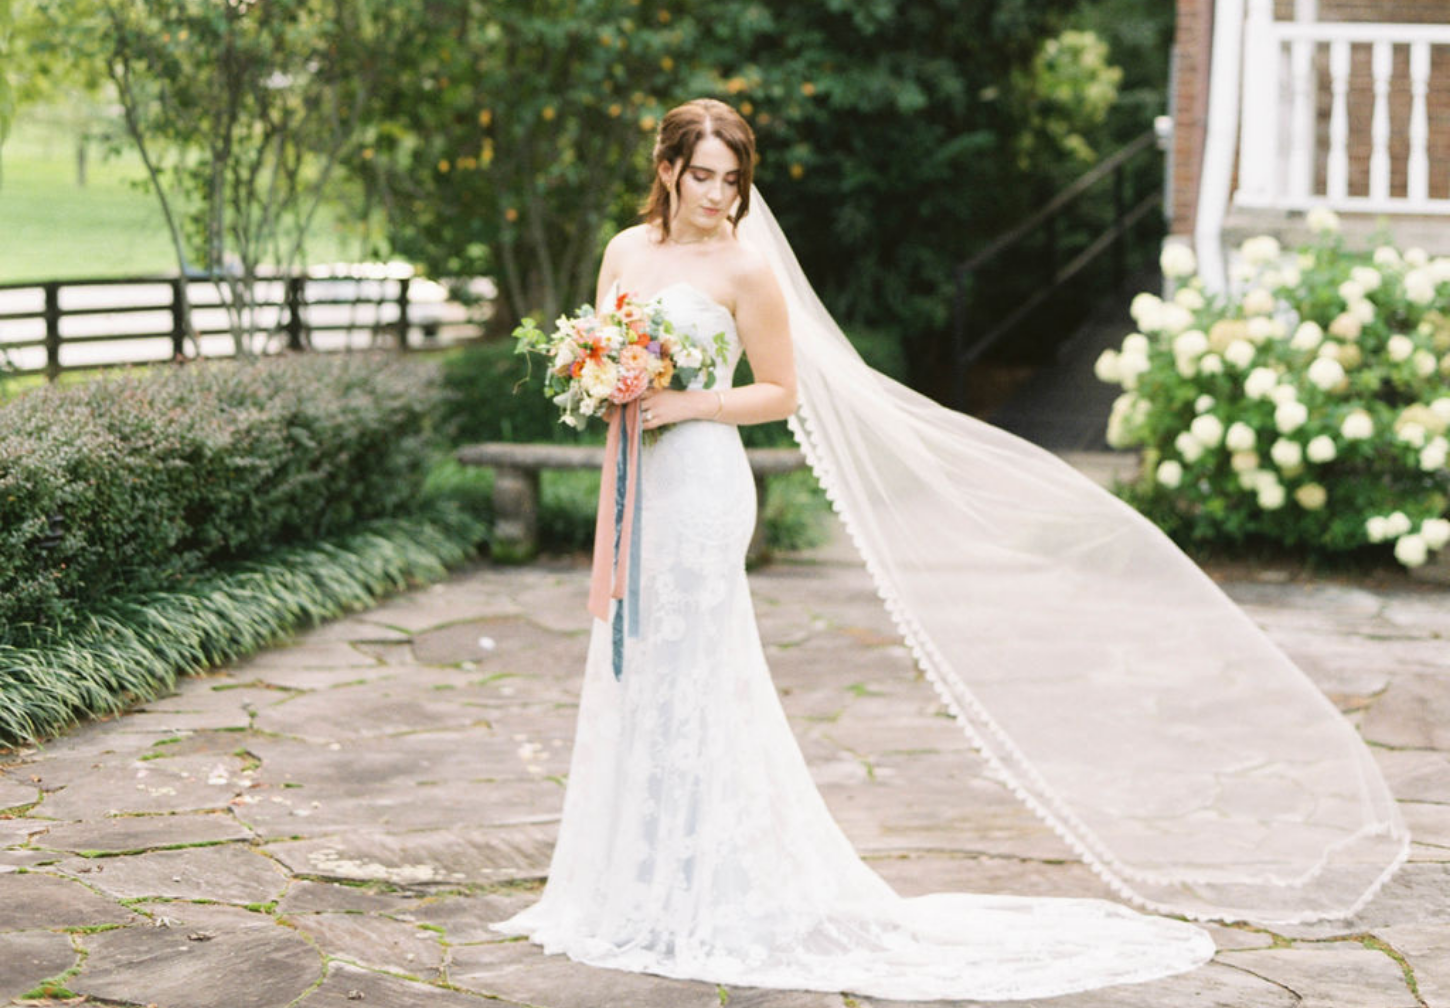 Warrenwood Manor - Kentucky Wedding Venue - Wedding Dress Shopping Tips & Inspiration